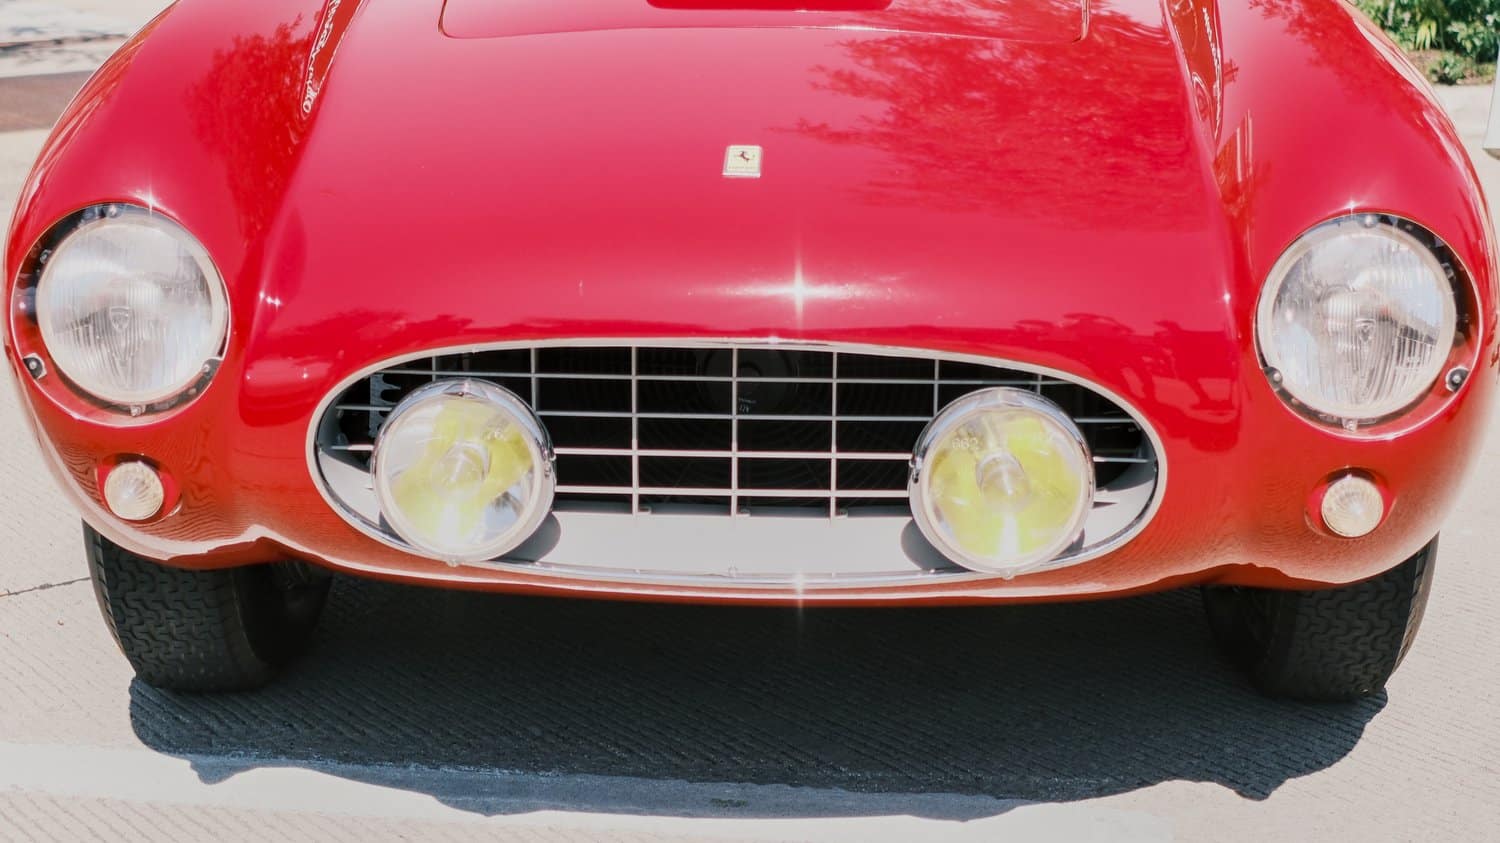 Vintage red Ferrari.